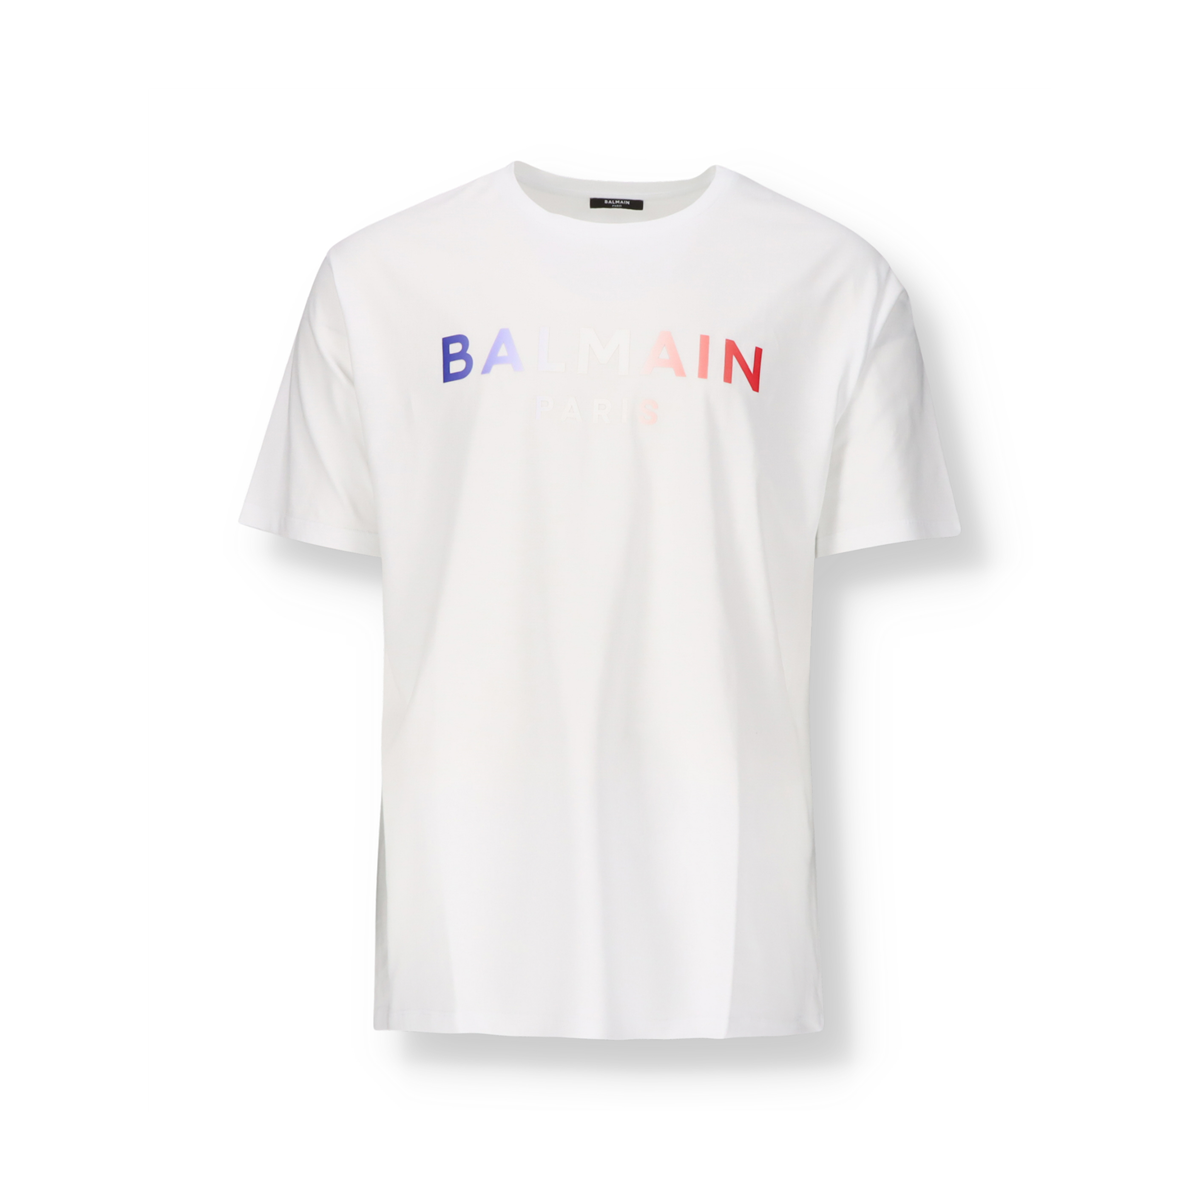 T-shirt Balmain